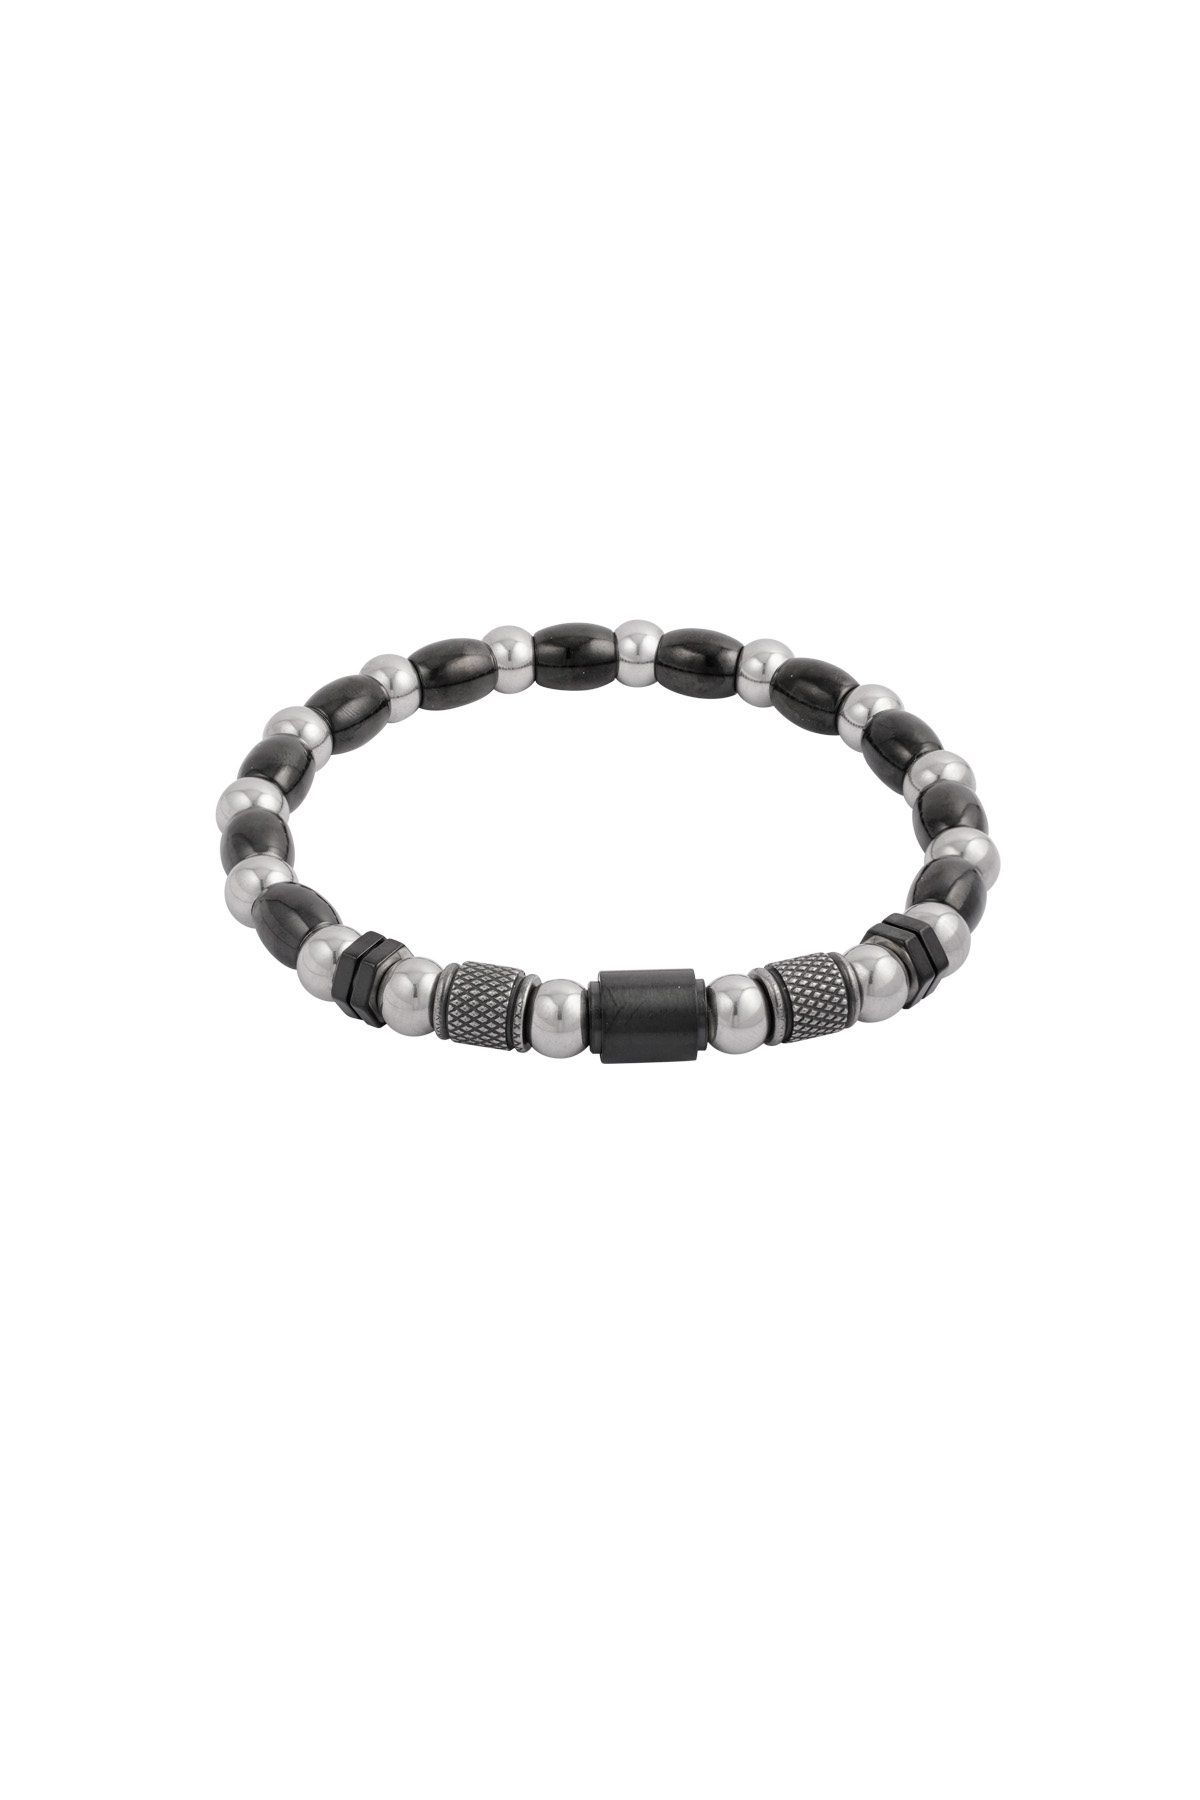 Heren armband zenith - zwart zilver h5 